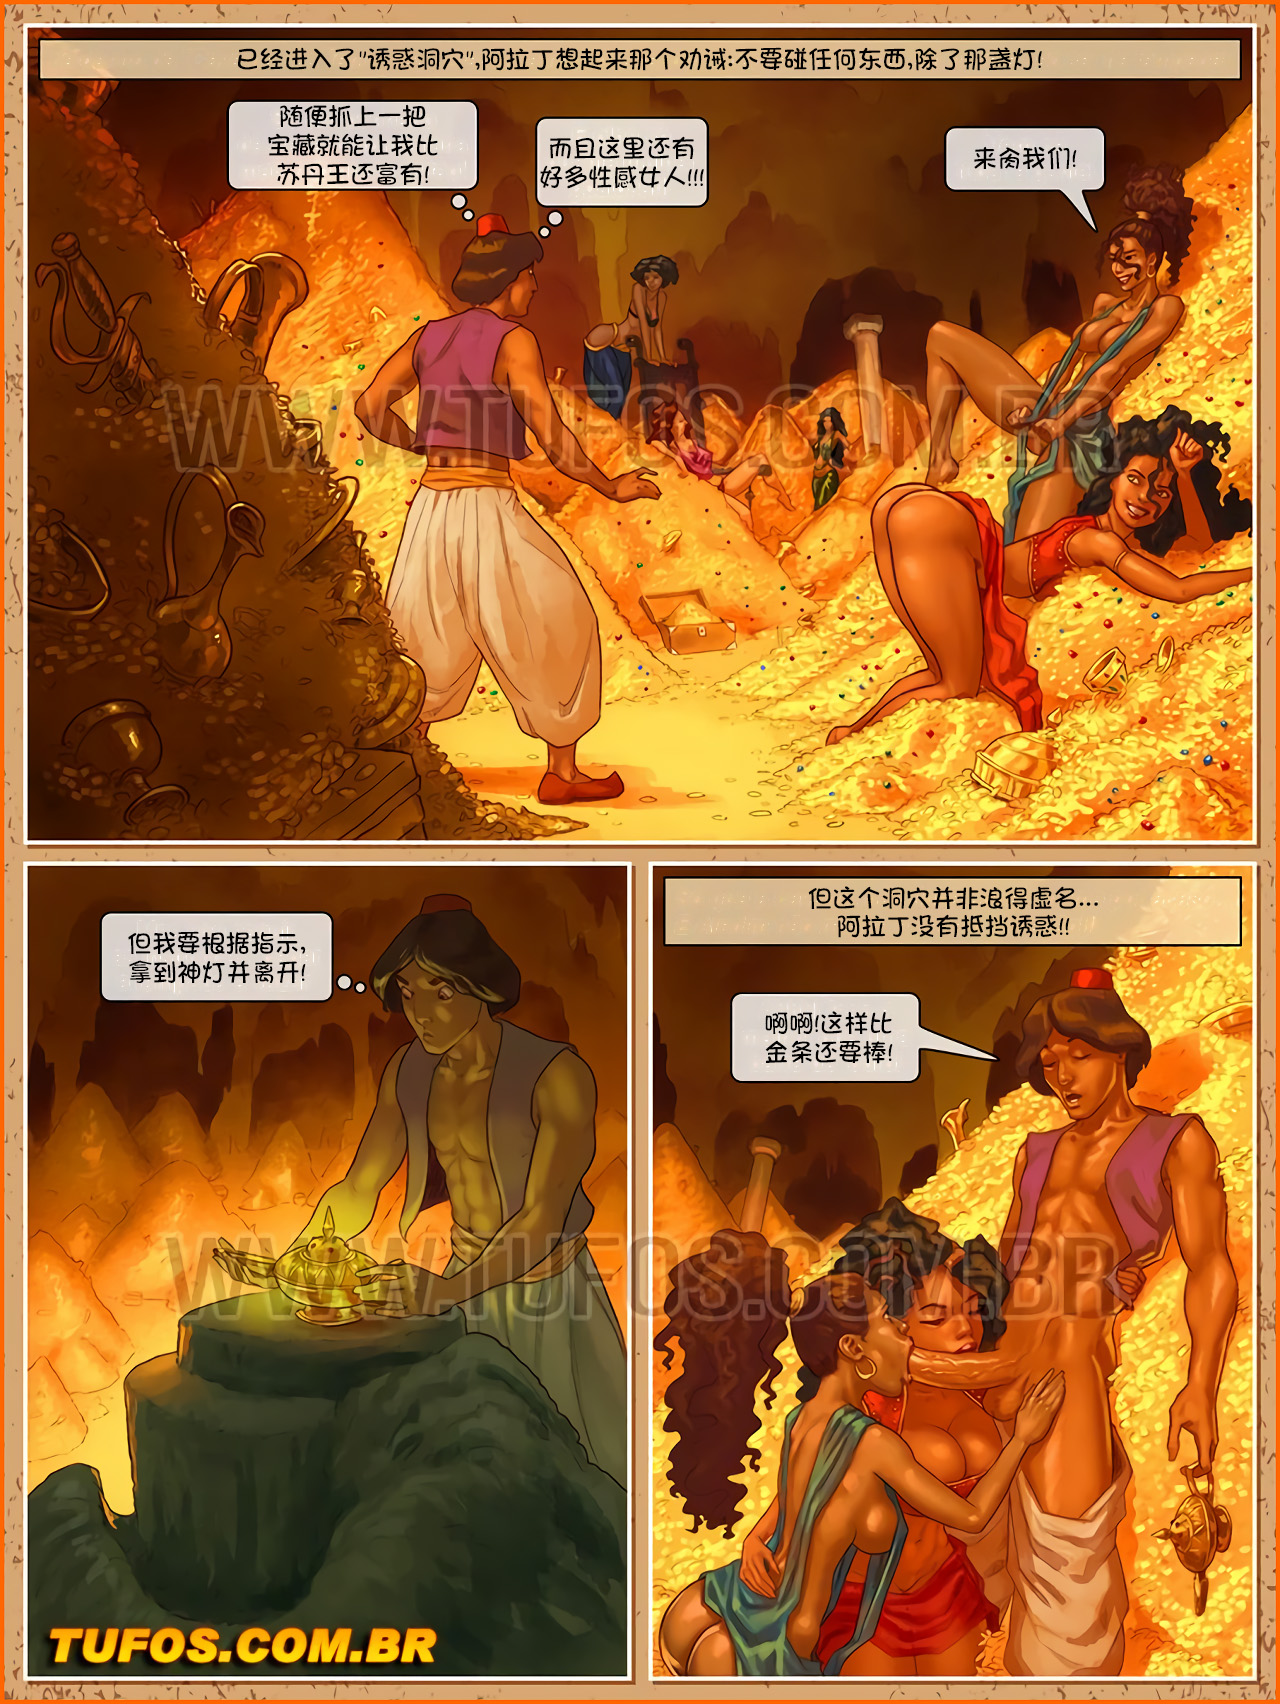 [Tufos]奶奶不会讲的童话 第7章-阿拉丁(Chinese)(艾娜兹玛汉化) [Tufos]Tales Grandma Doesn’t Tell 7 - Aladdin